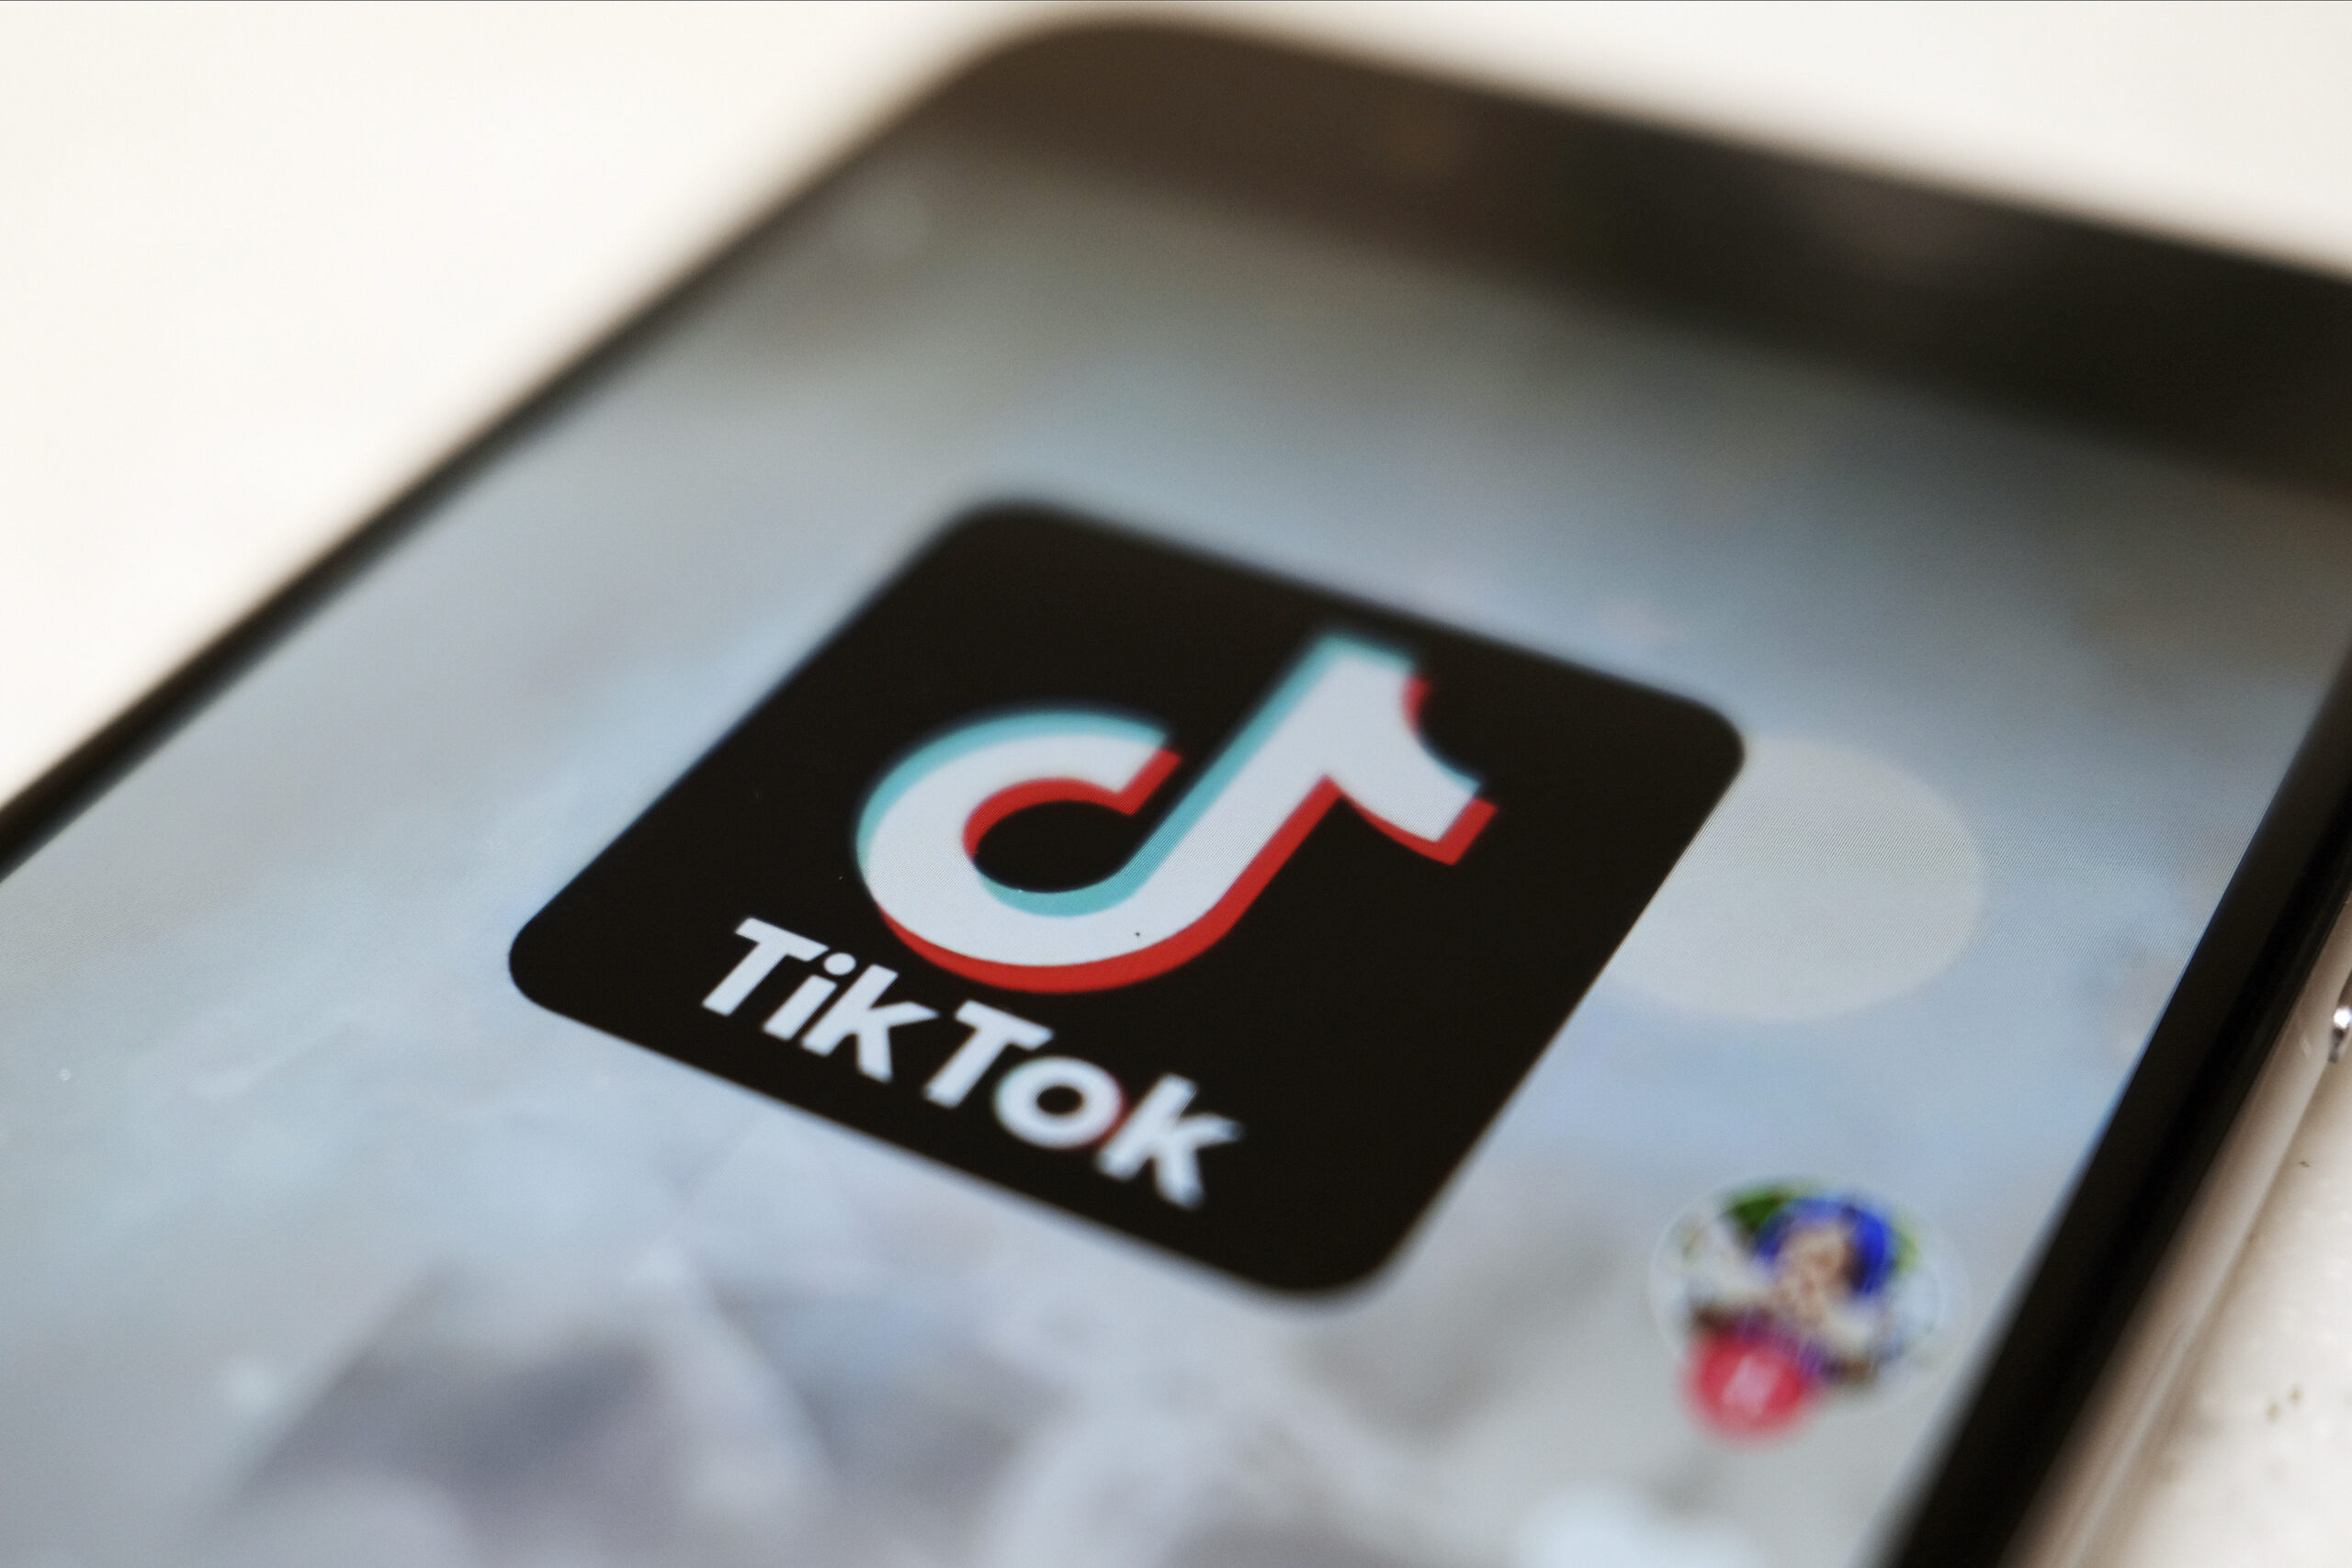 The TikTok logo on a smartphone